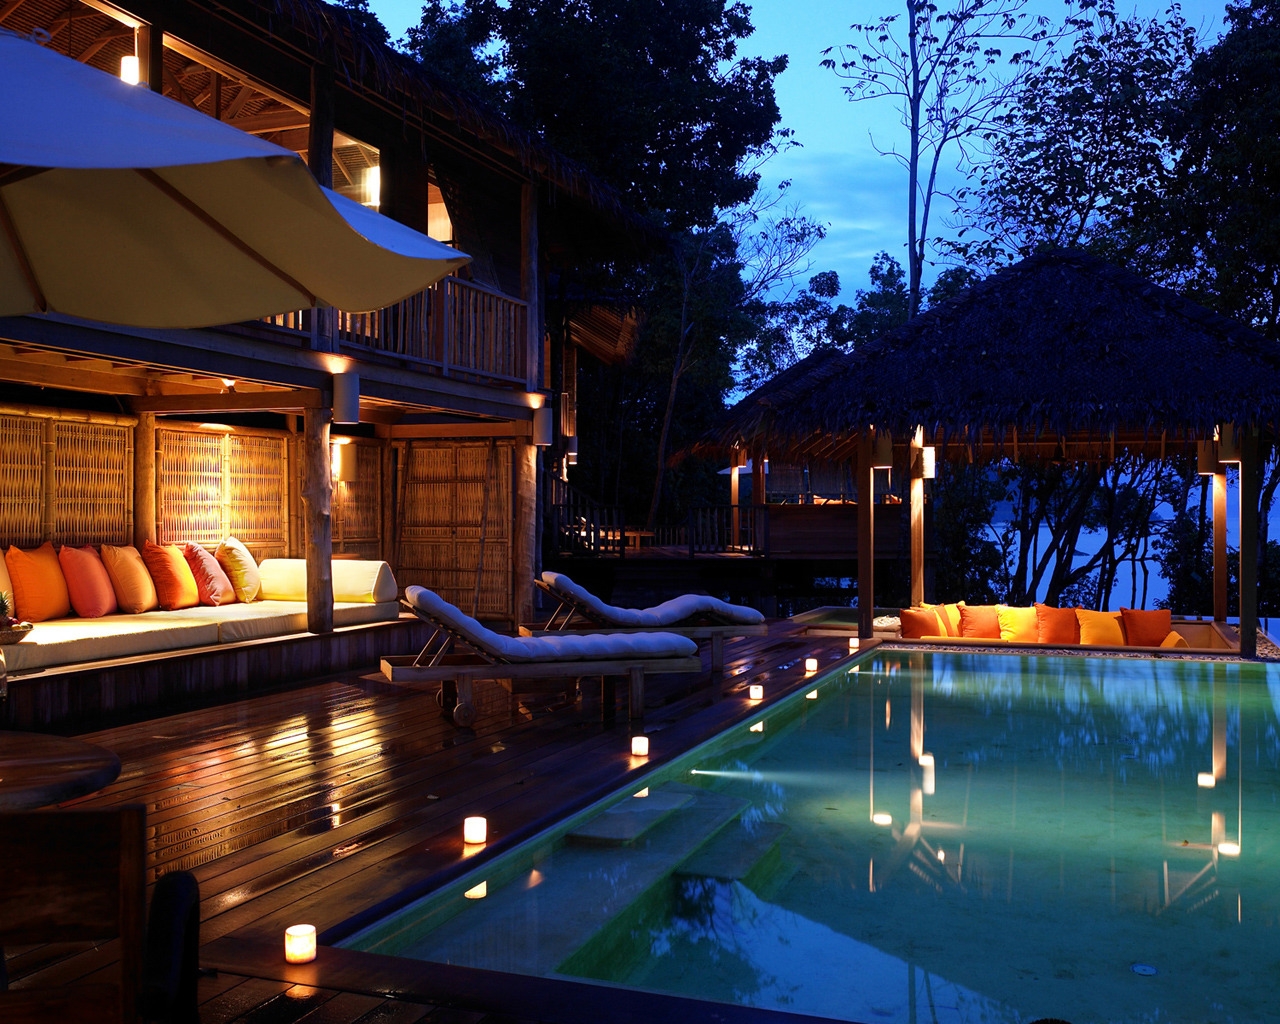 Luxury Sea Resort for 1280 x 1024 resolution